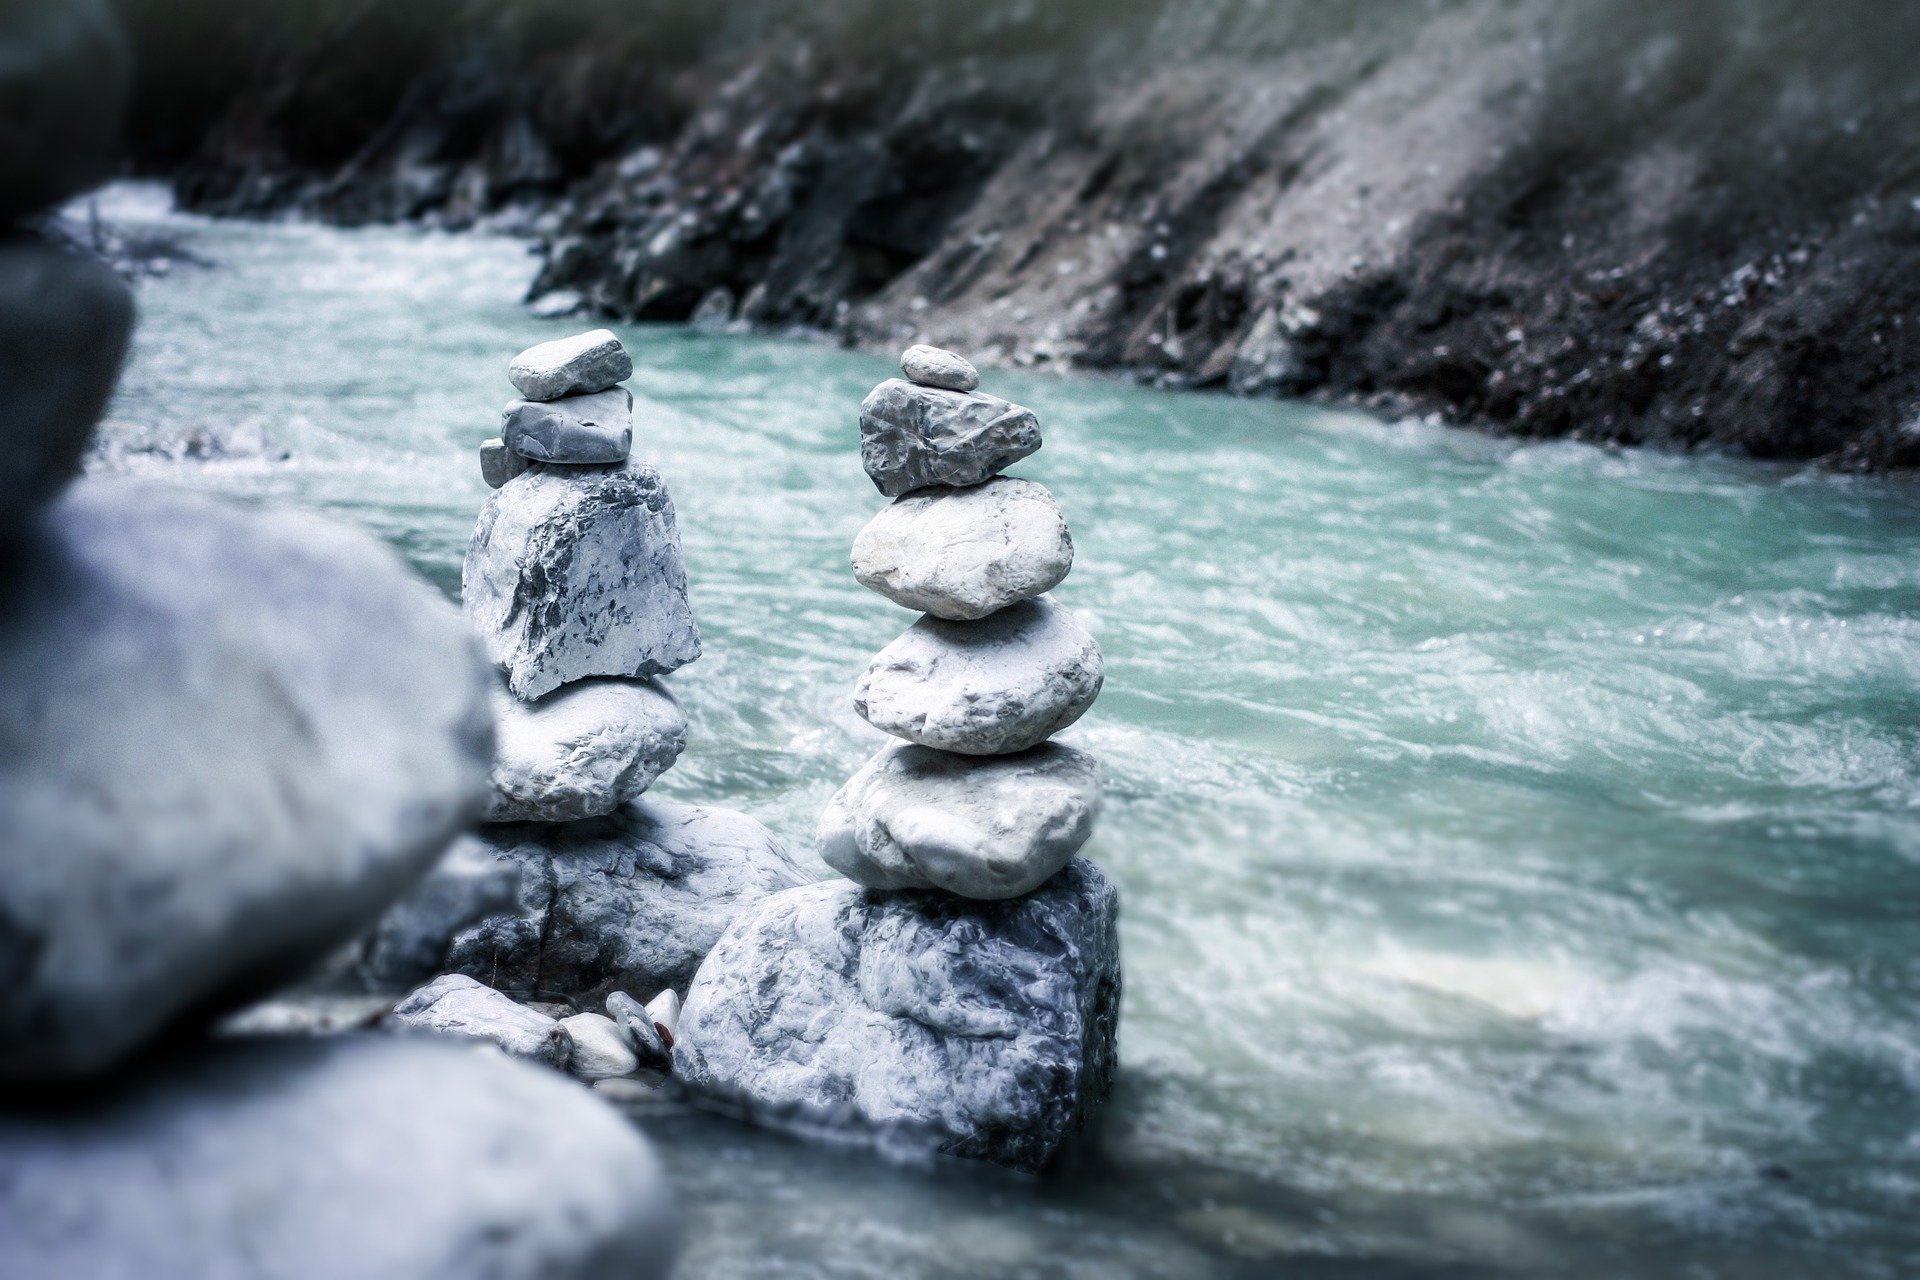 River rocks | Source: Pixaby